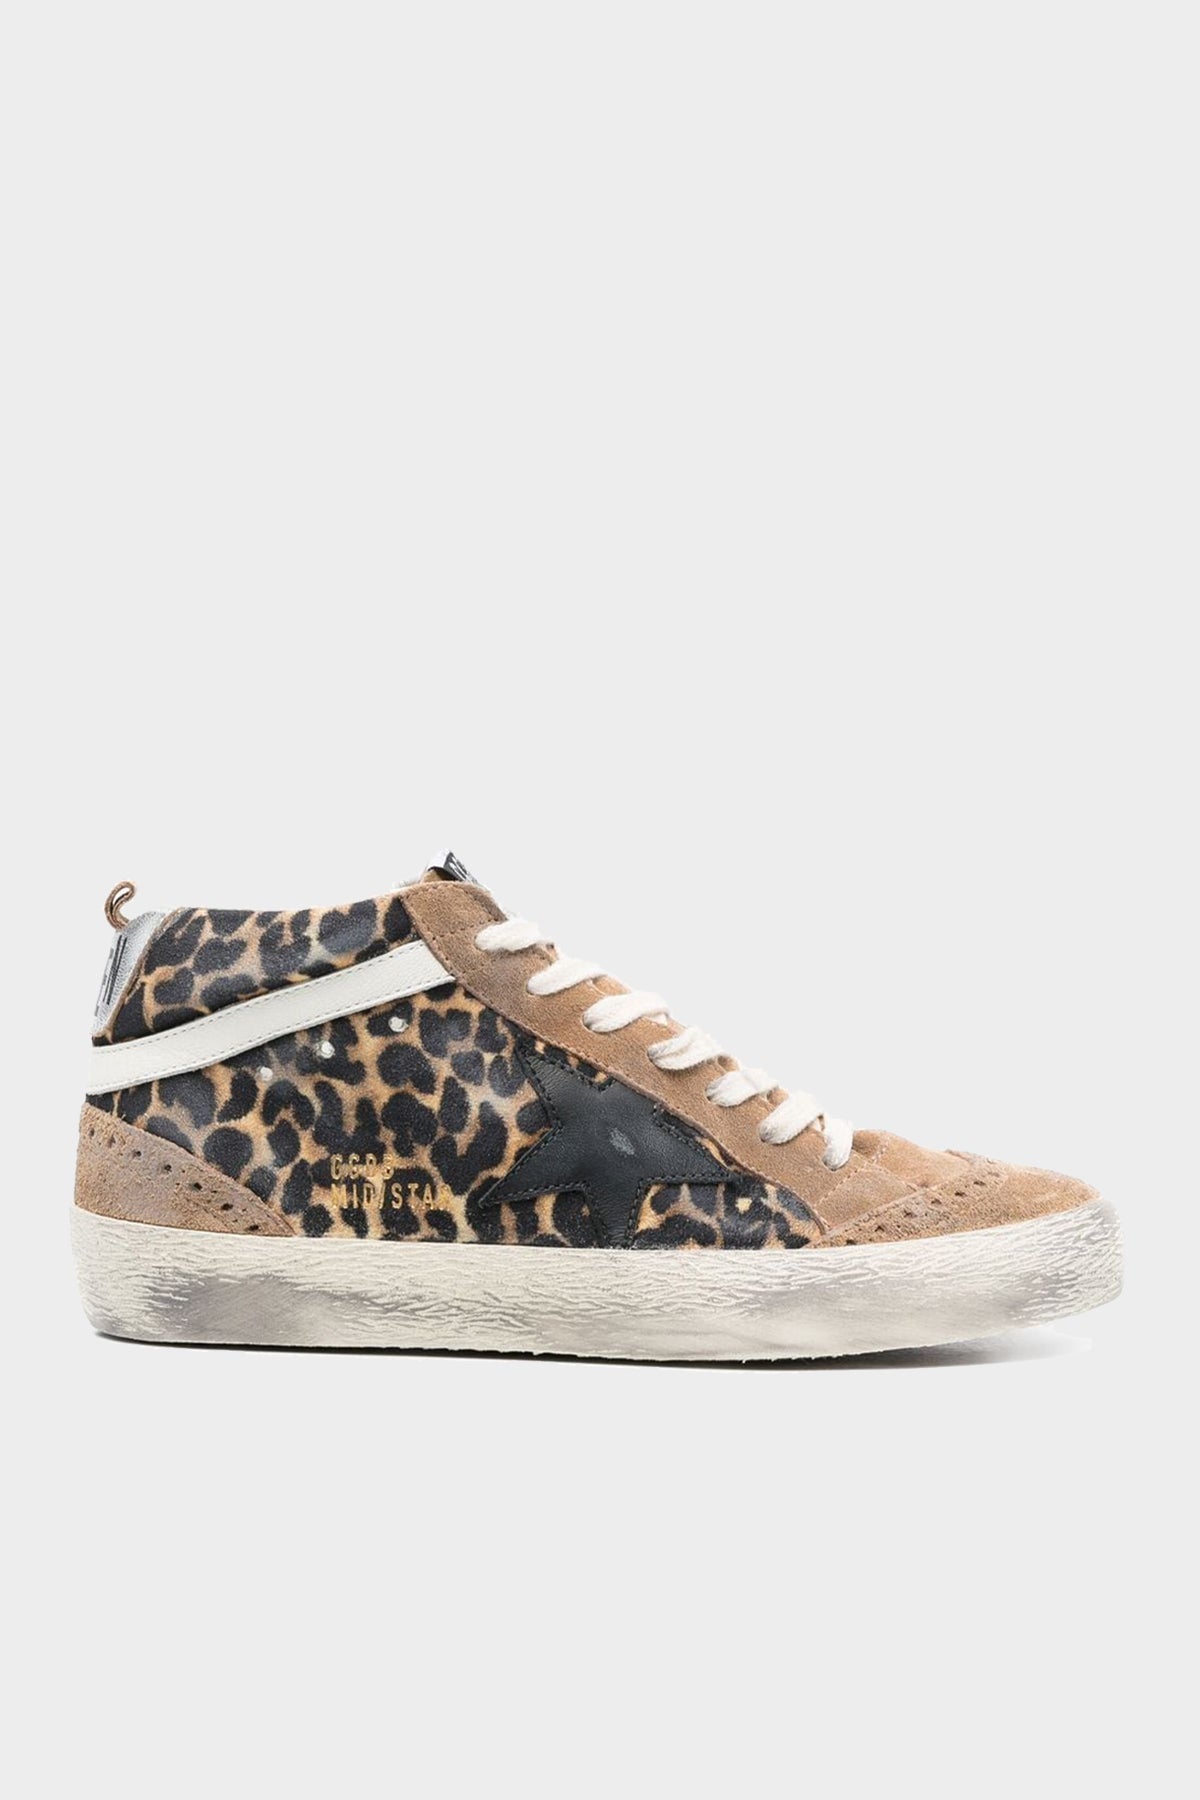 Mid-Star Leopard Suede Leather Sneaker - shop-olivia.com